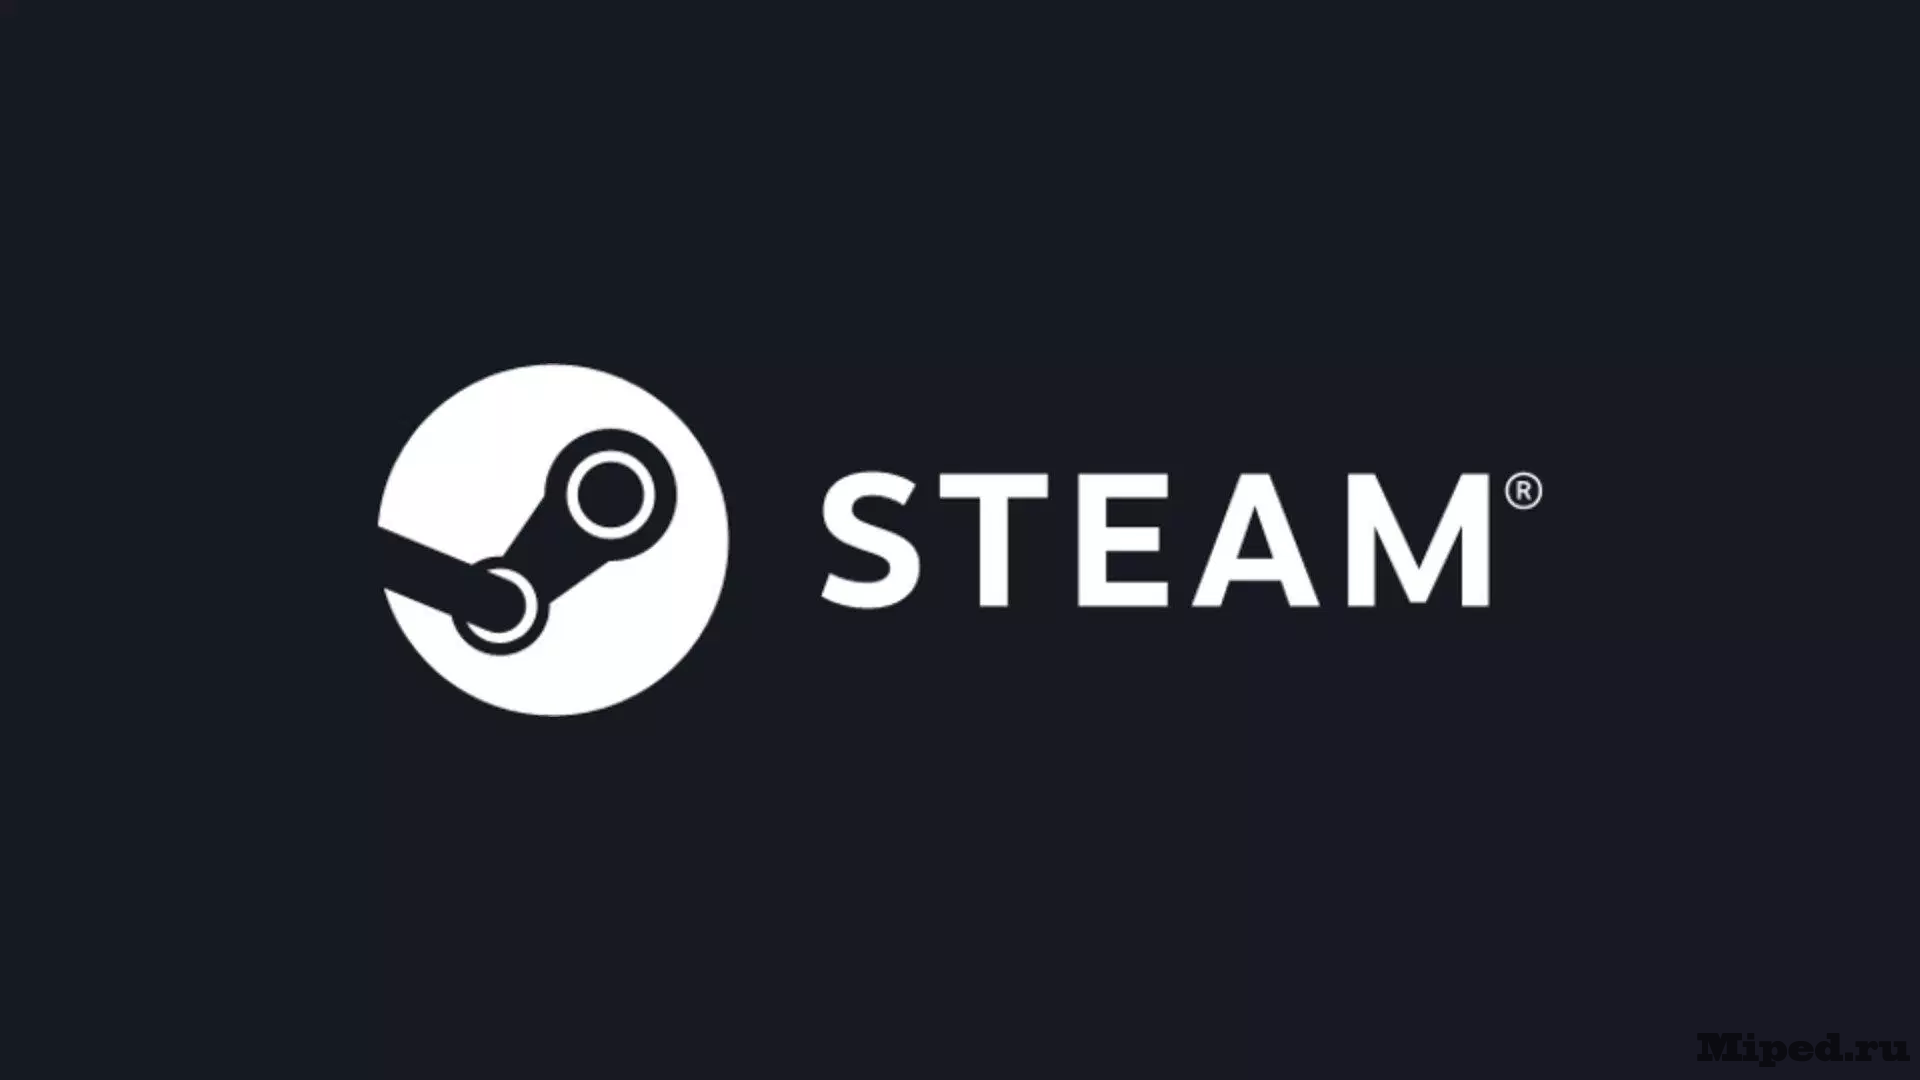 My game steam. Steam. Логотип стима. Steam фото. Steam надпись.